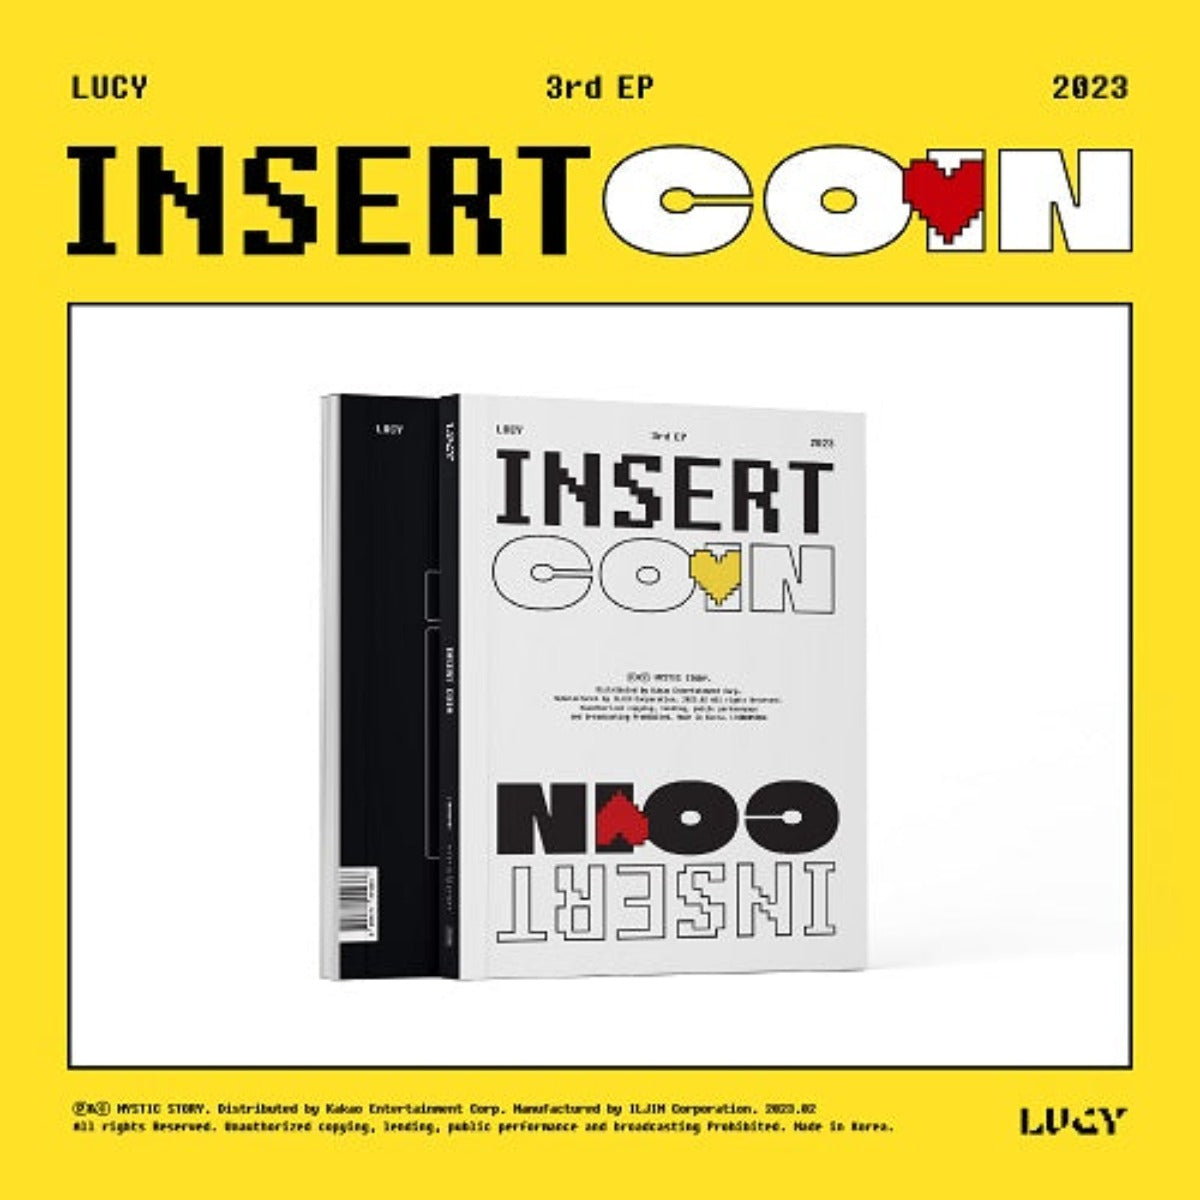 LUCY EP Album Vol. 3 - Insert Coin